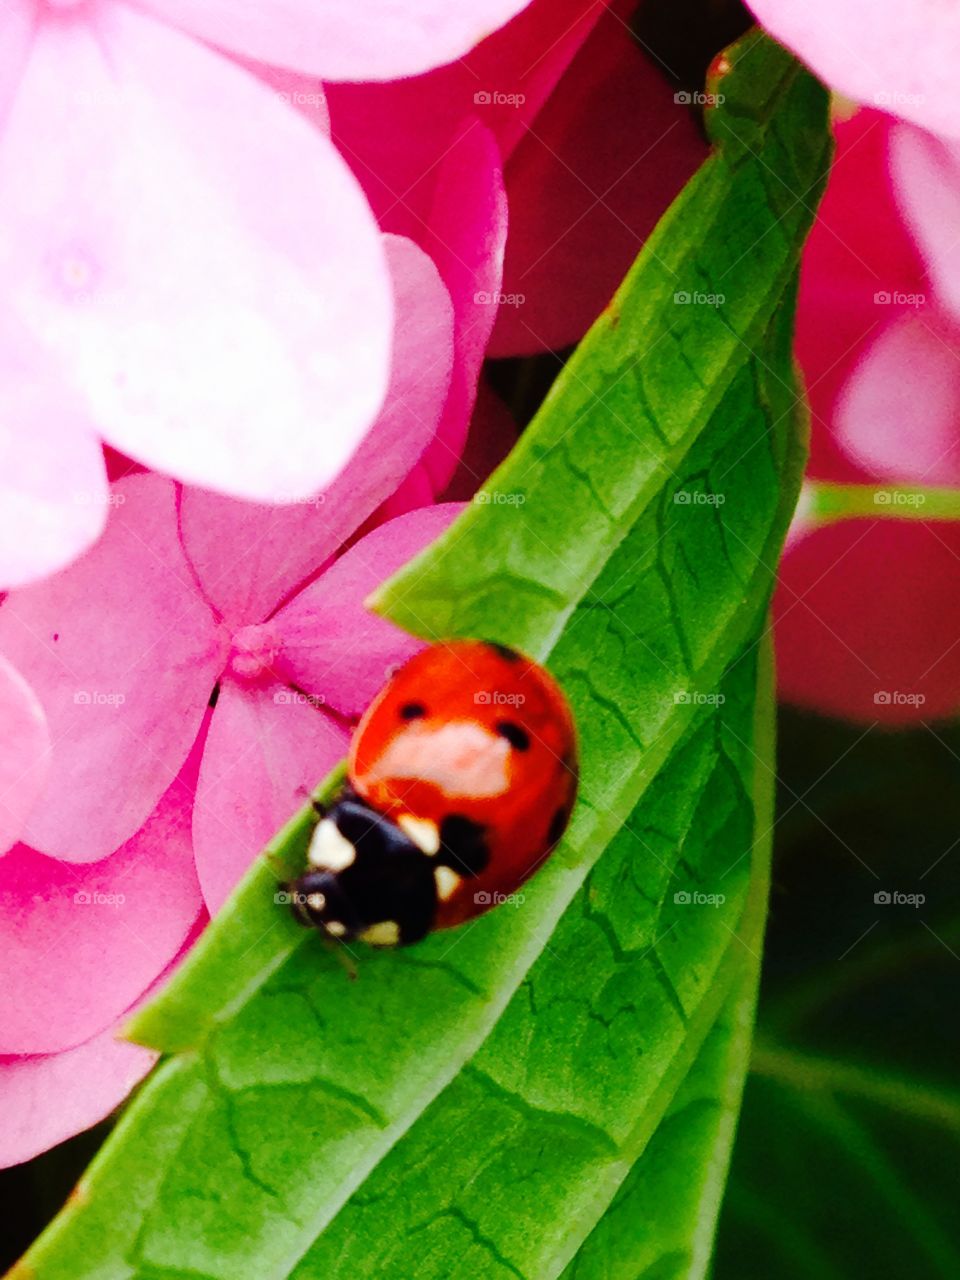 Lady of the garden. Ladybug on hydrangea leaf